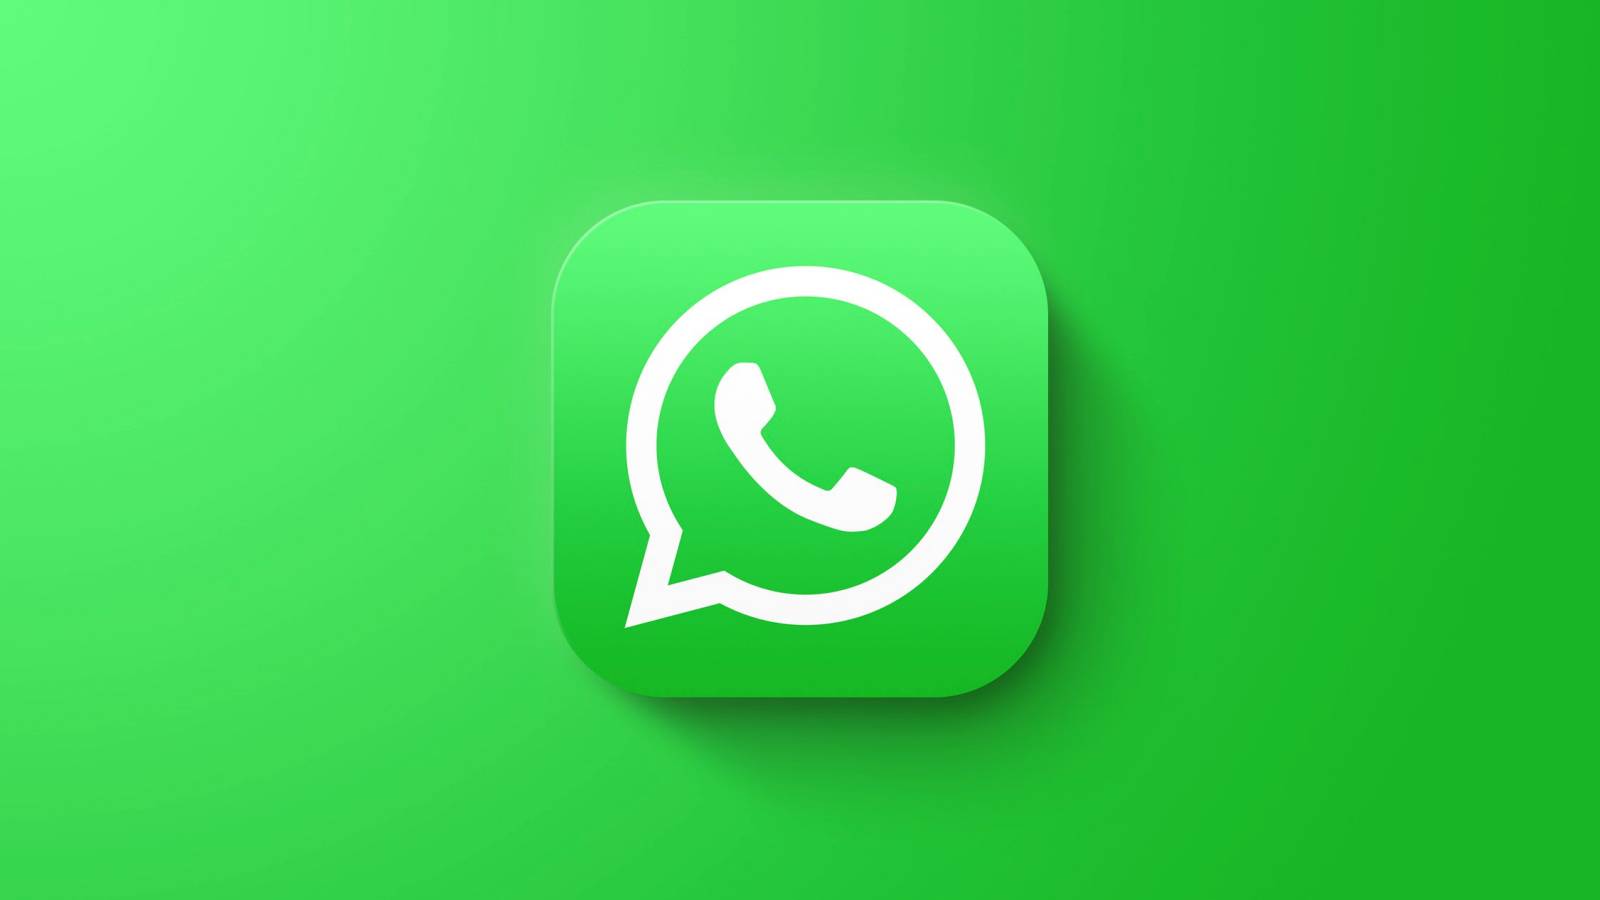 WhatsApp-vrijheid